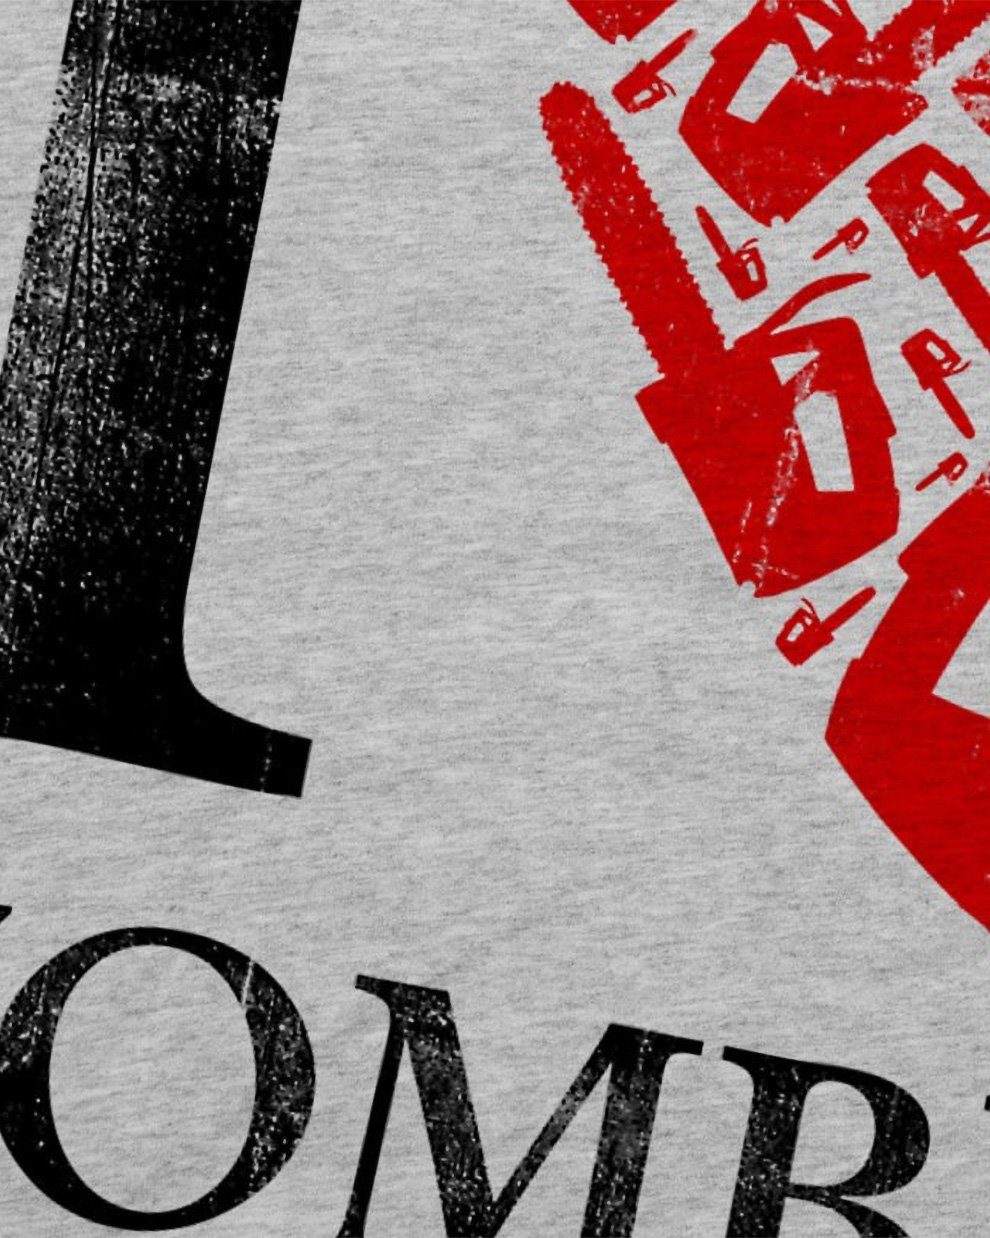 grau walking style3 film axt T-Shirt halloween Love horror kettensäge Zombie Herren Print-Shirt dead the meliert